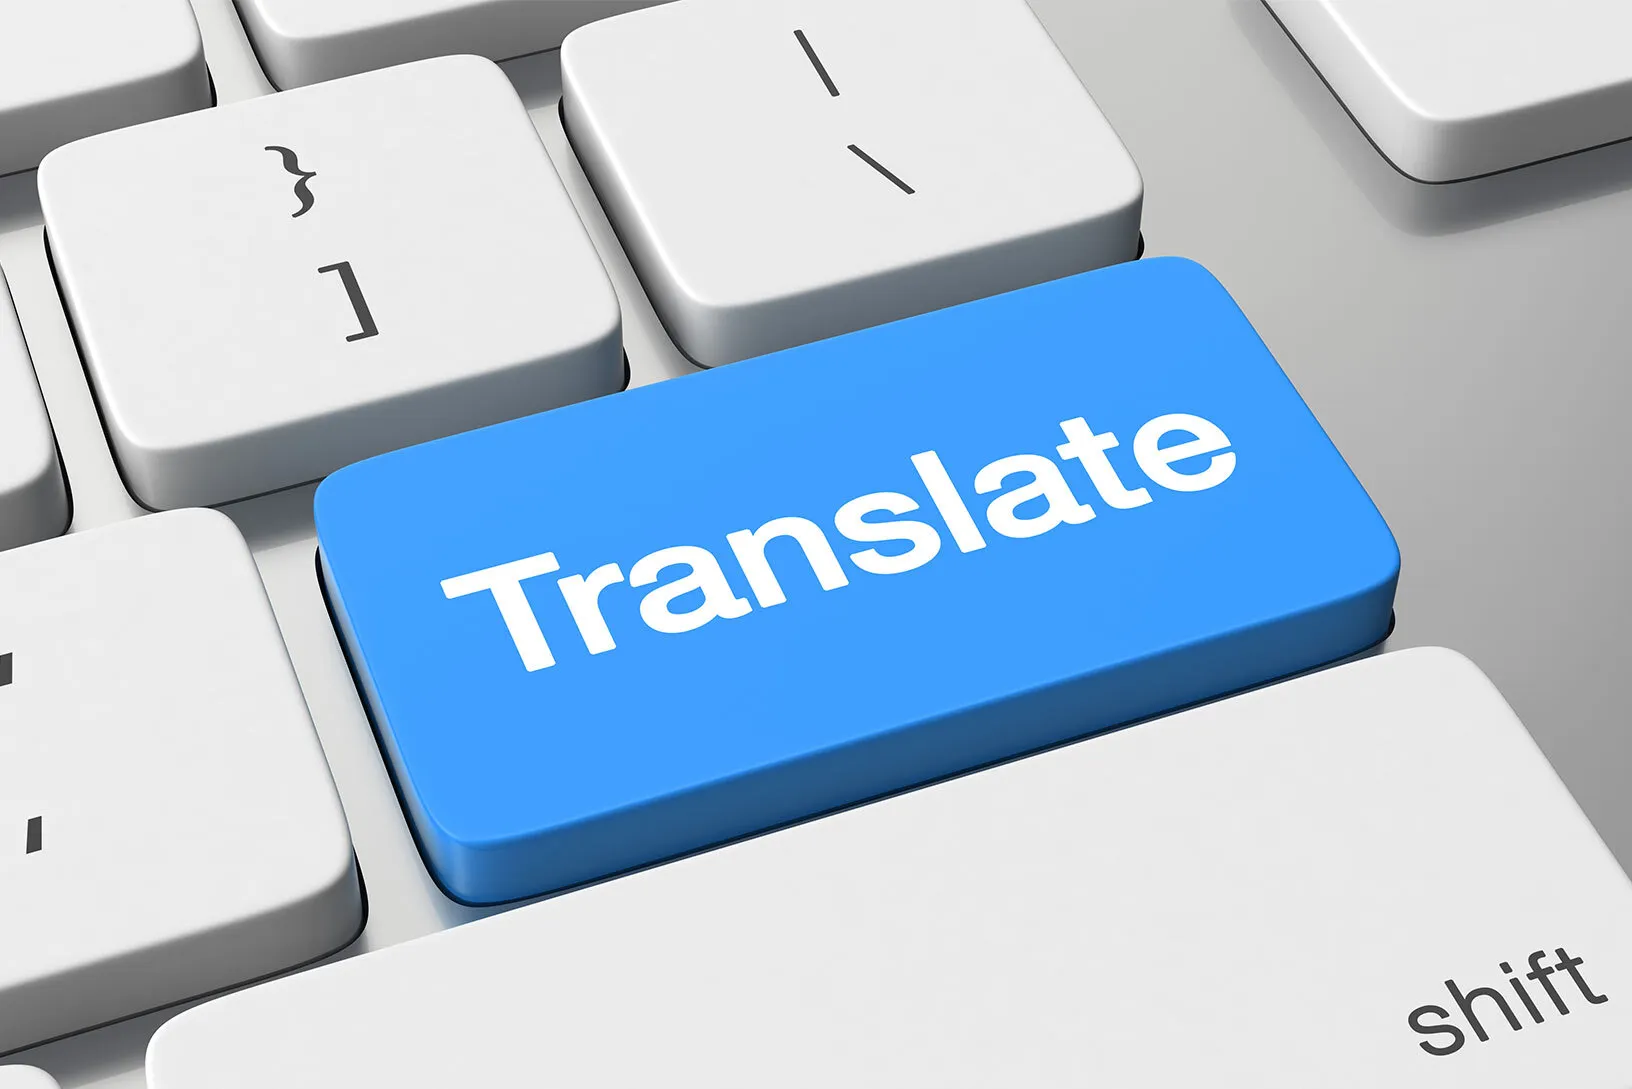 Computer keyboard with "Translate"